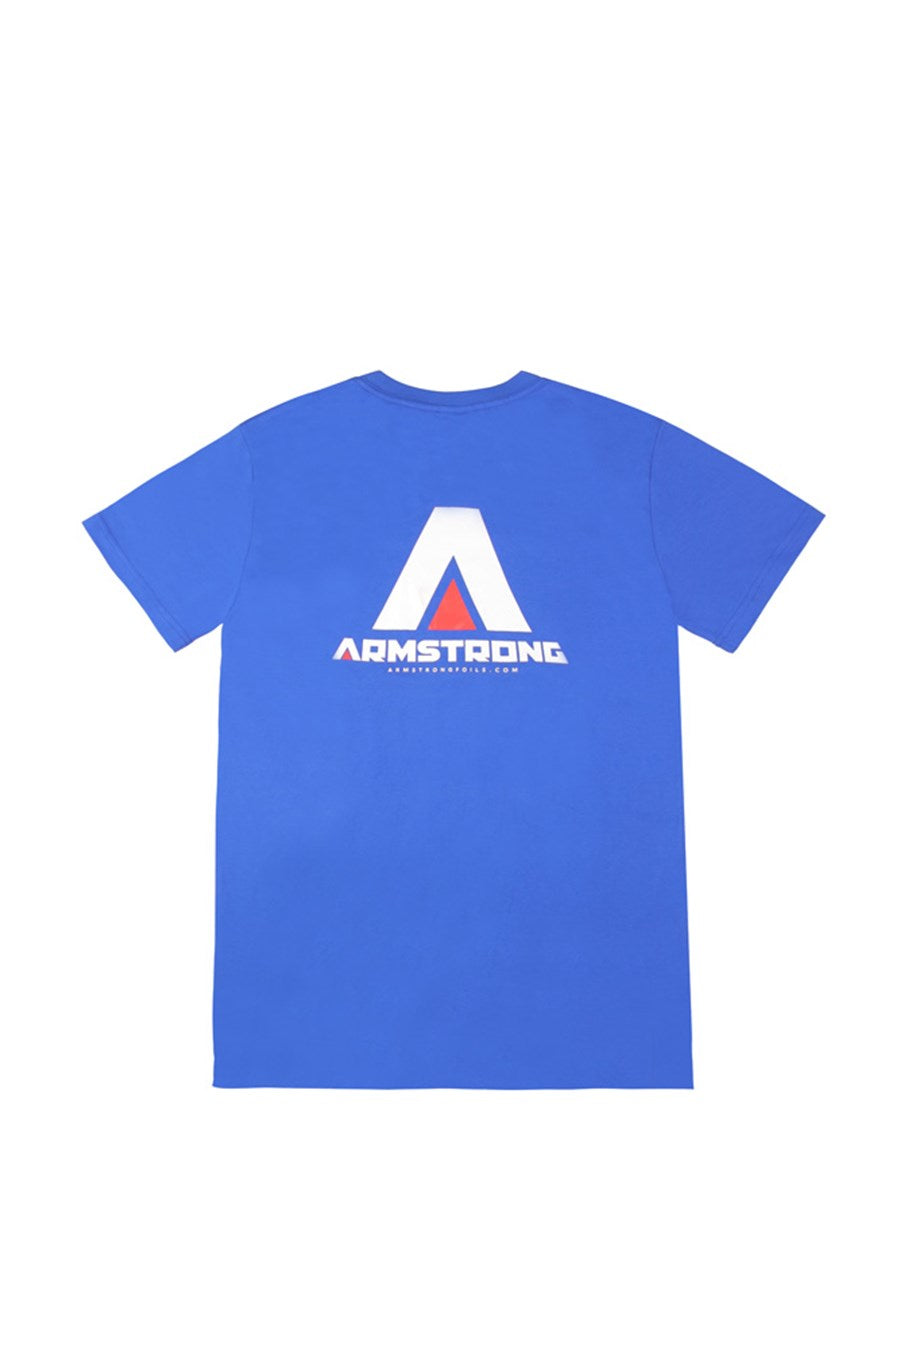 Armstrong T Shirt